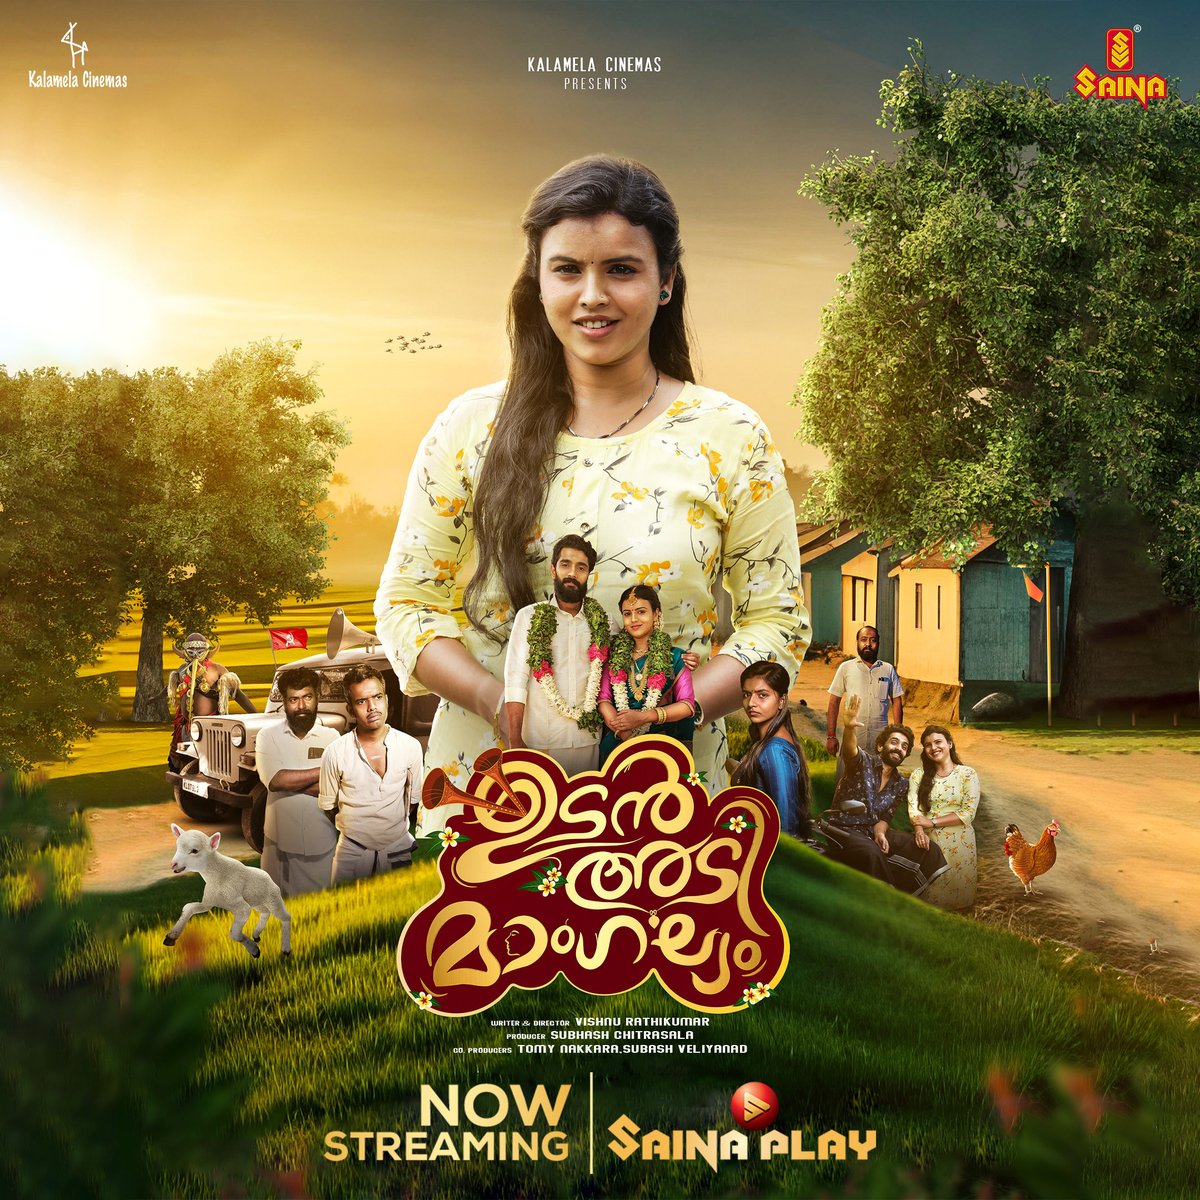 Udanadi Mangalyam Now Streaming on Saina Play

Watch ▶ sainaplay.com/movie/udanadi-… 

#MalayalamMovie #UdanadiMangalyam #SainaPlay